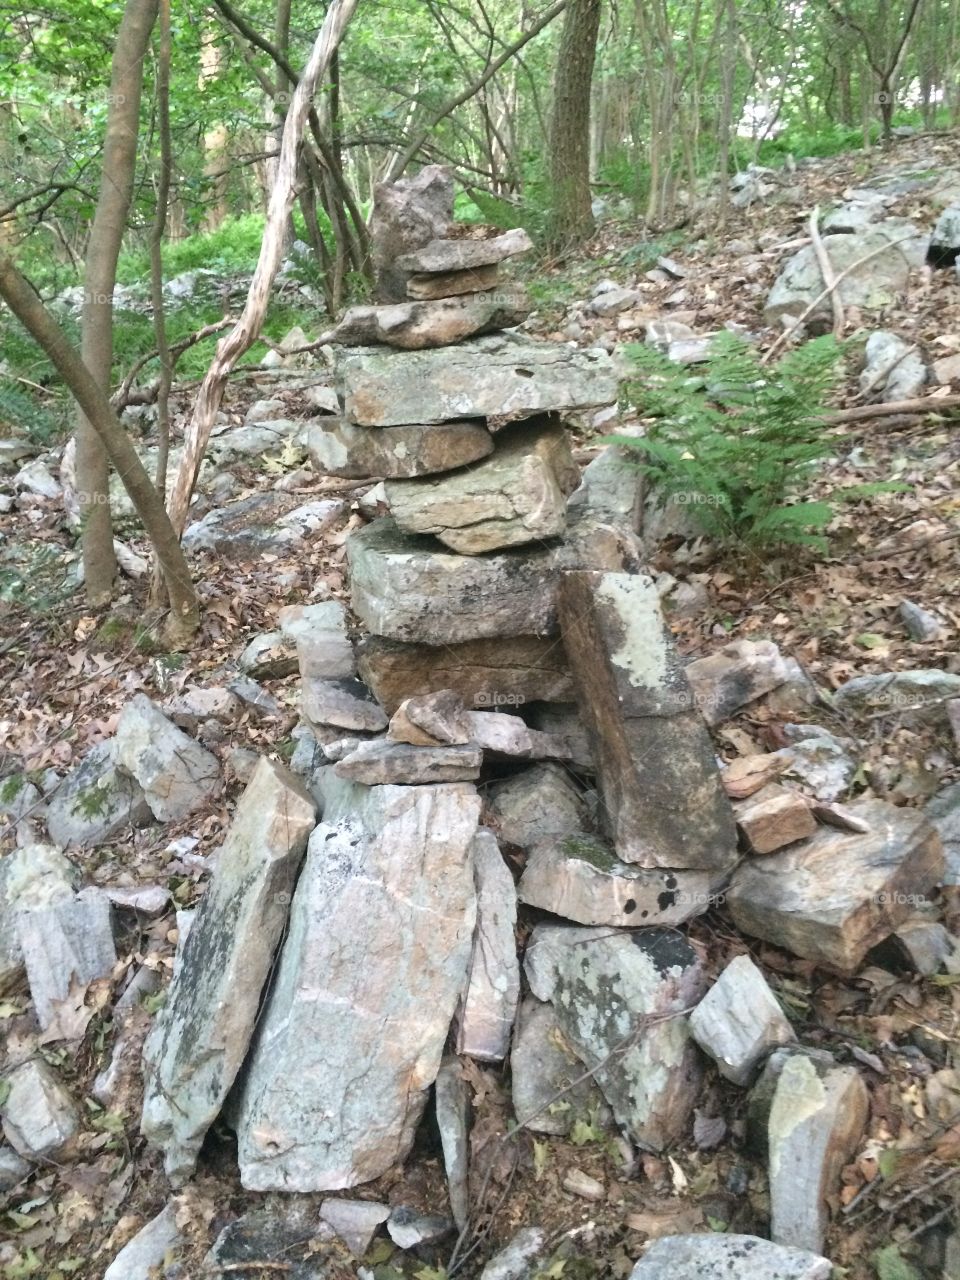 Tower of rocks